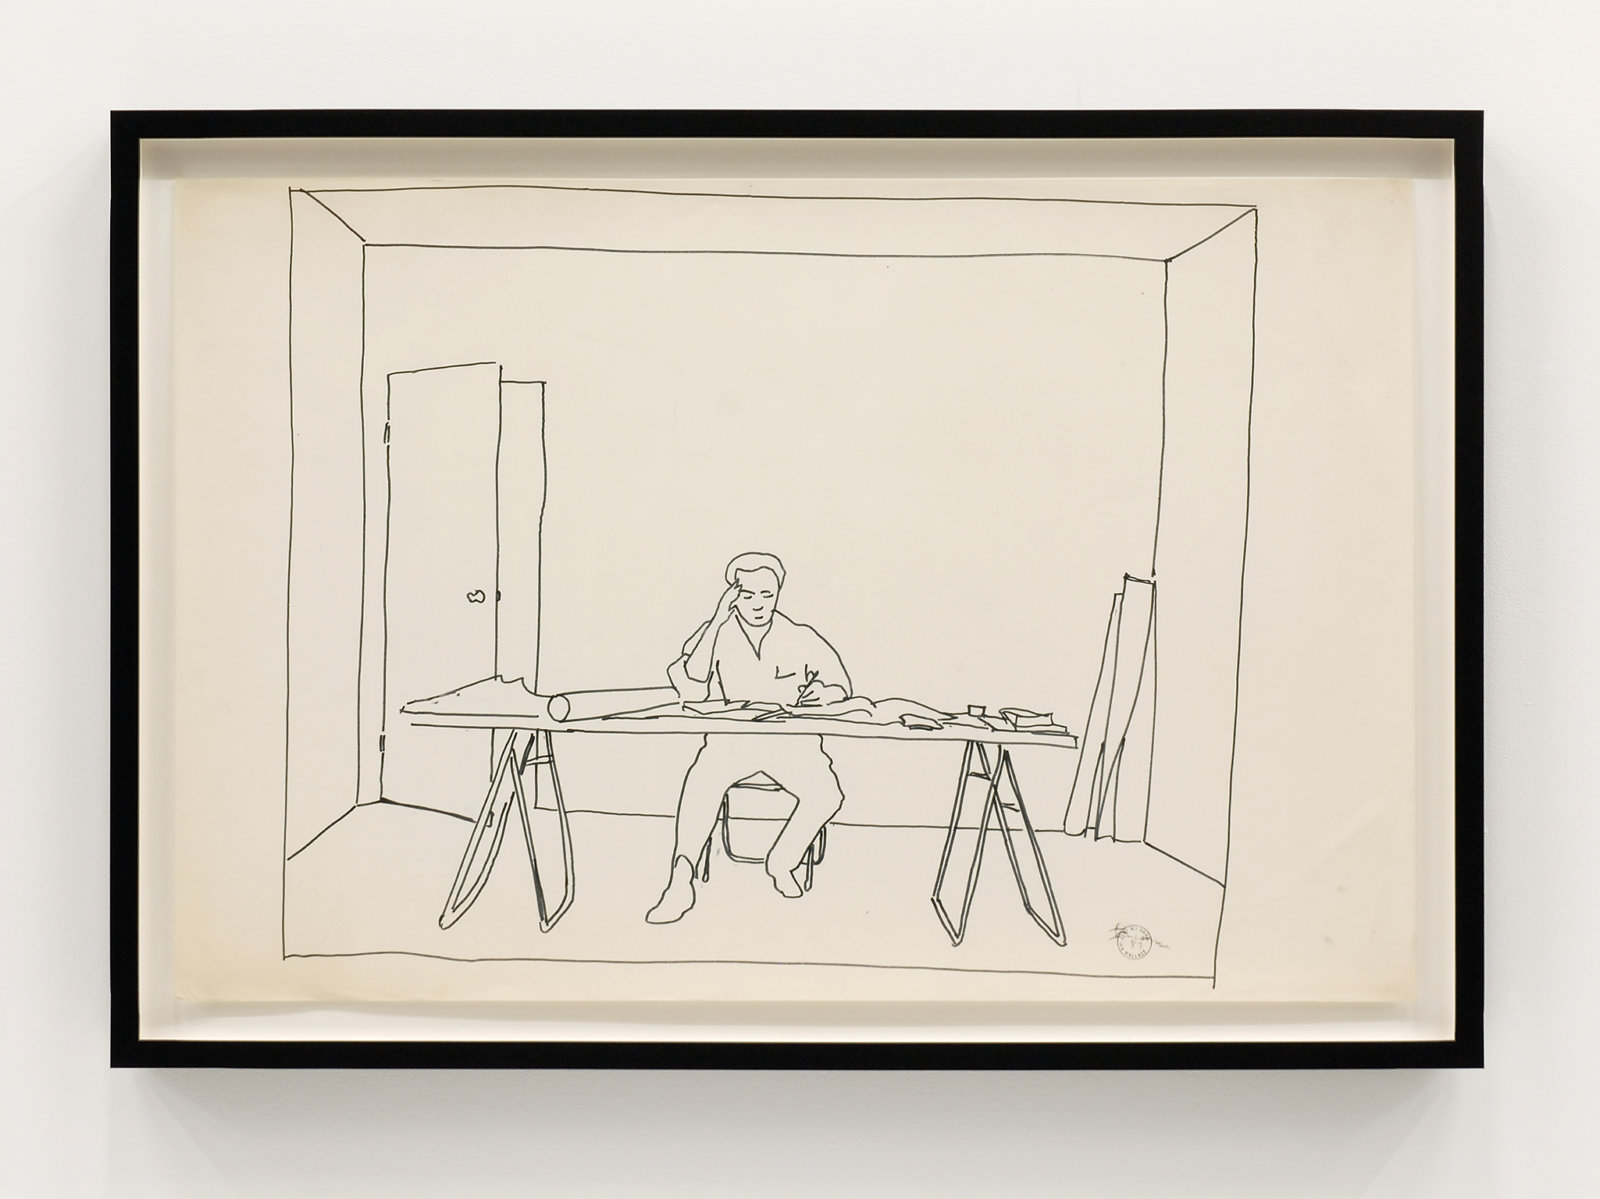 Ian Wallace, At Work 1983, 1983, felt pen on mylar, 22 x 34 in. (56 x 86 cm)